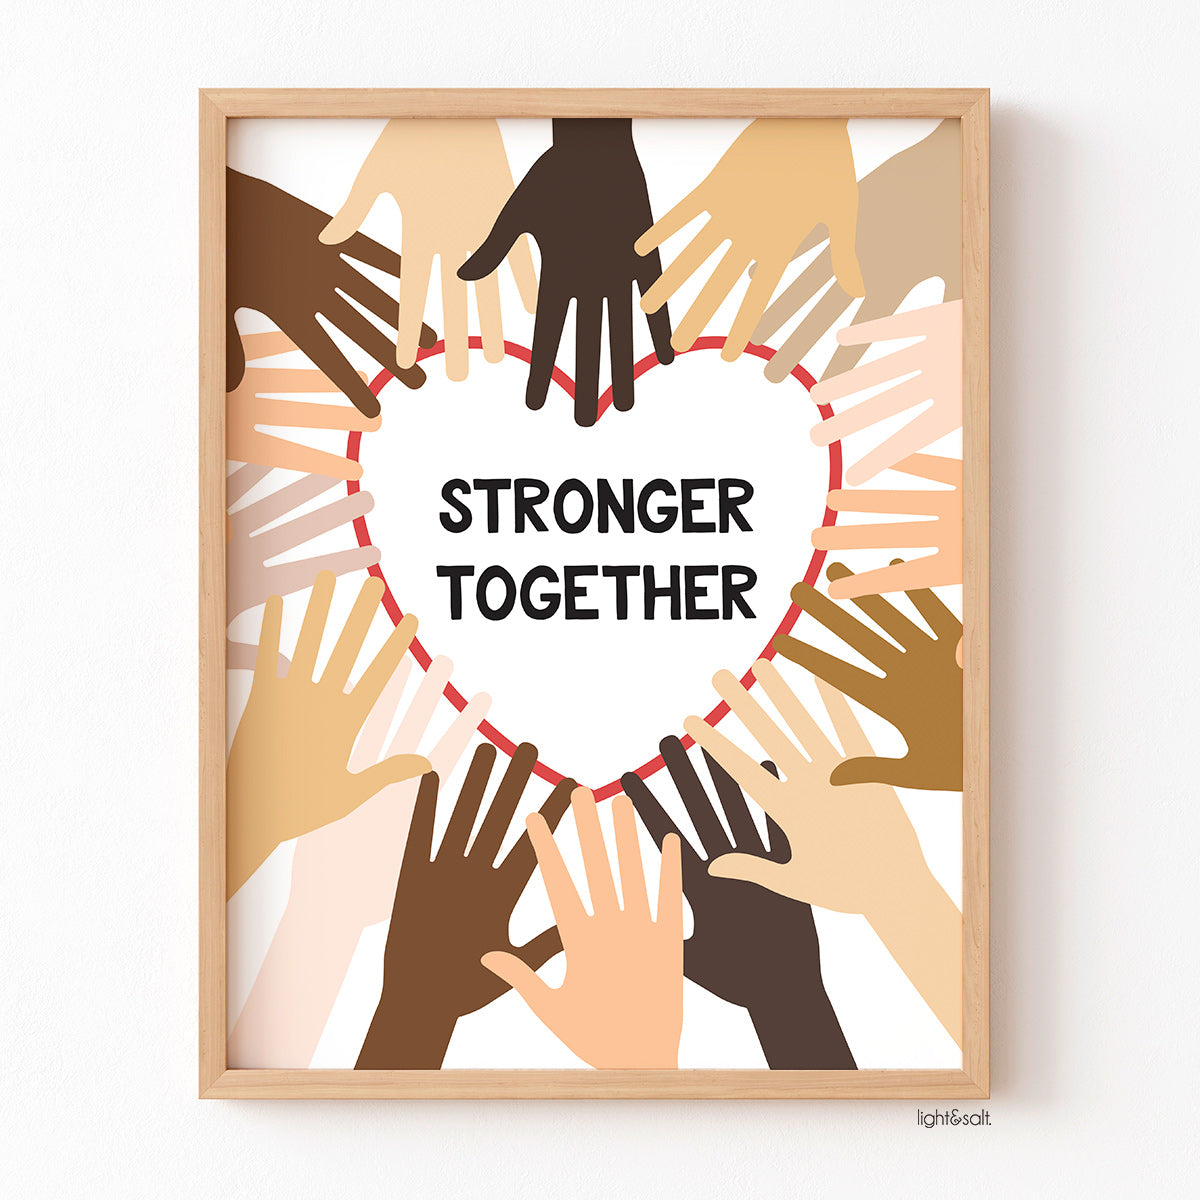 Stronger together poster